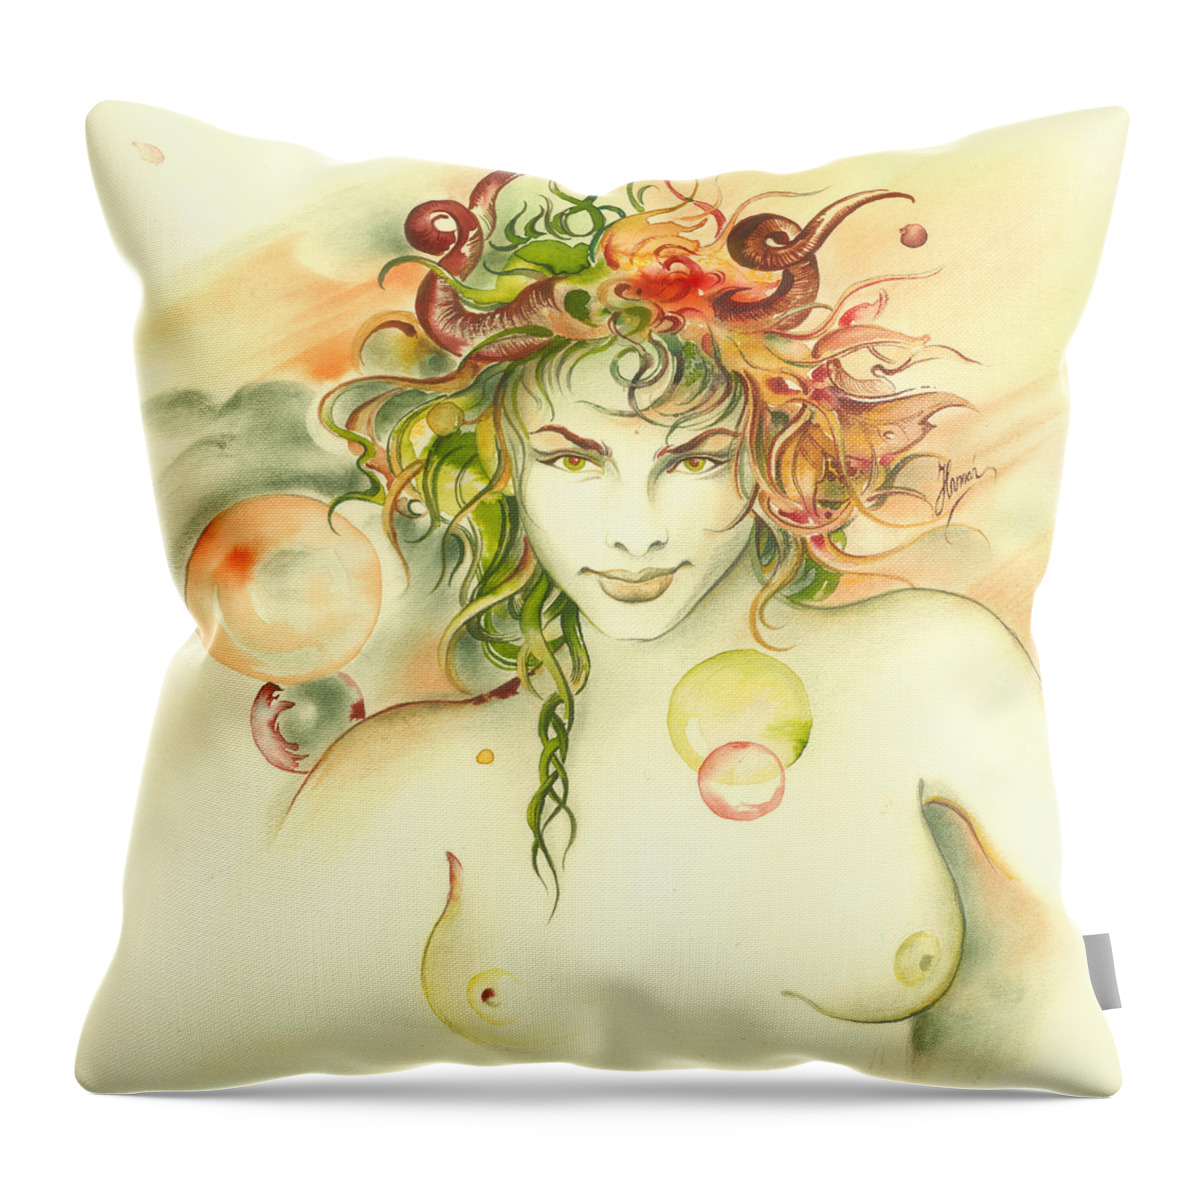  Zodiac Throw Pillow featuring the painting The Capricorn by Anna Ewa Miarczynska